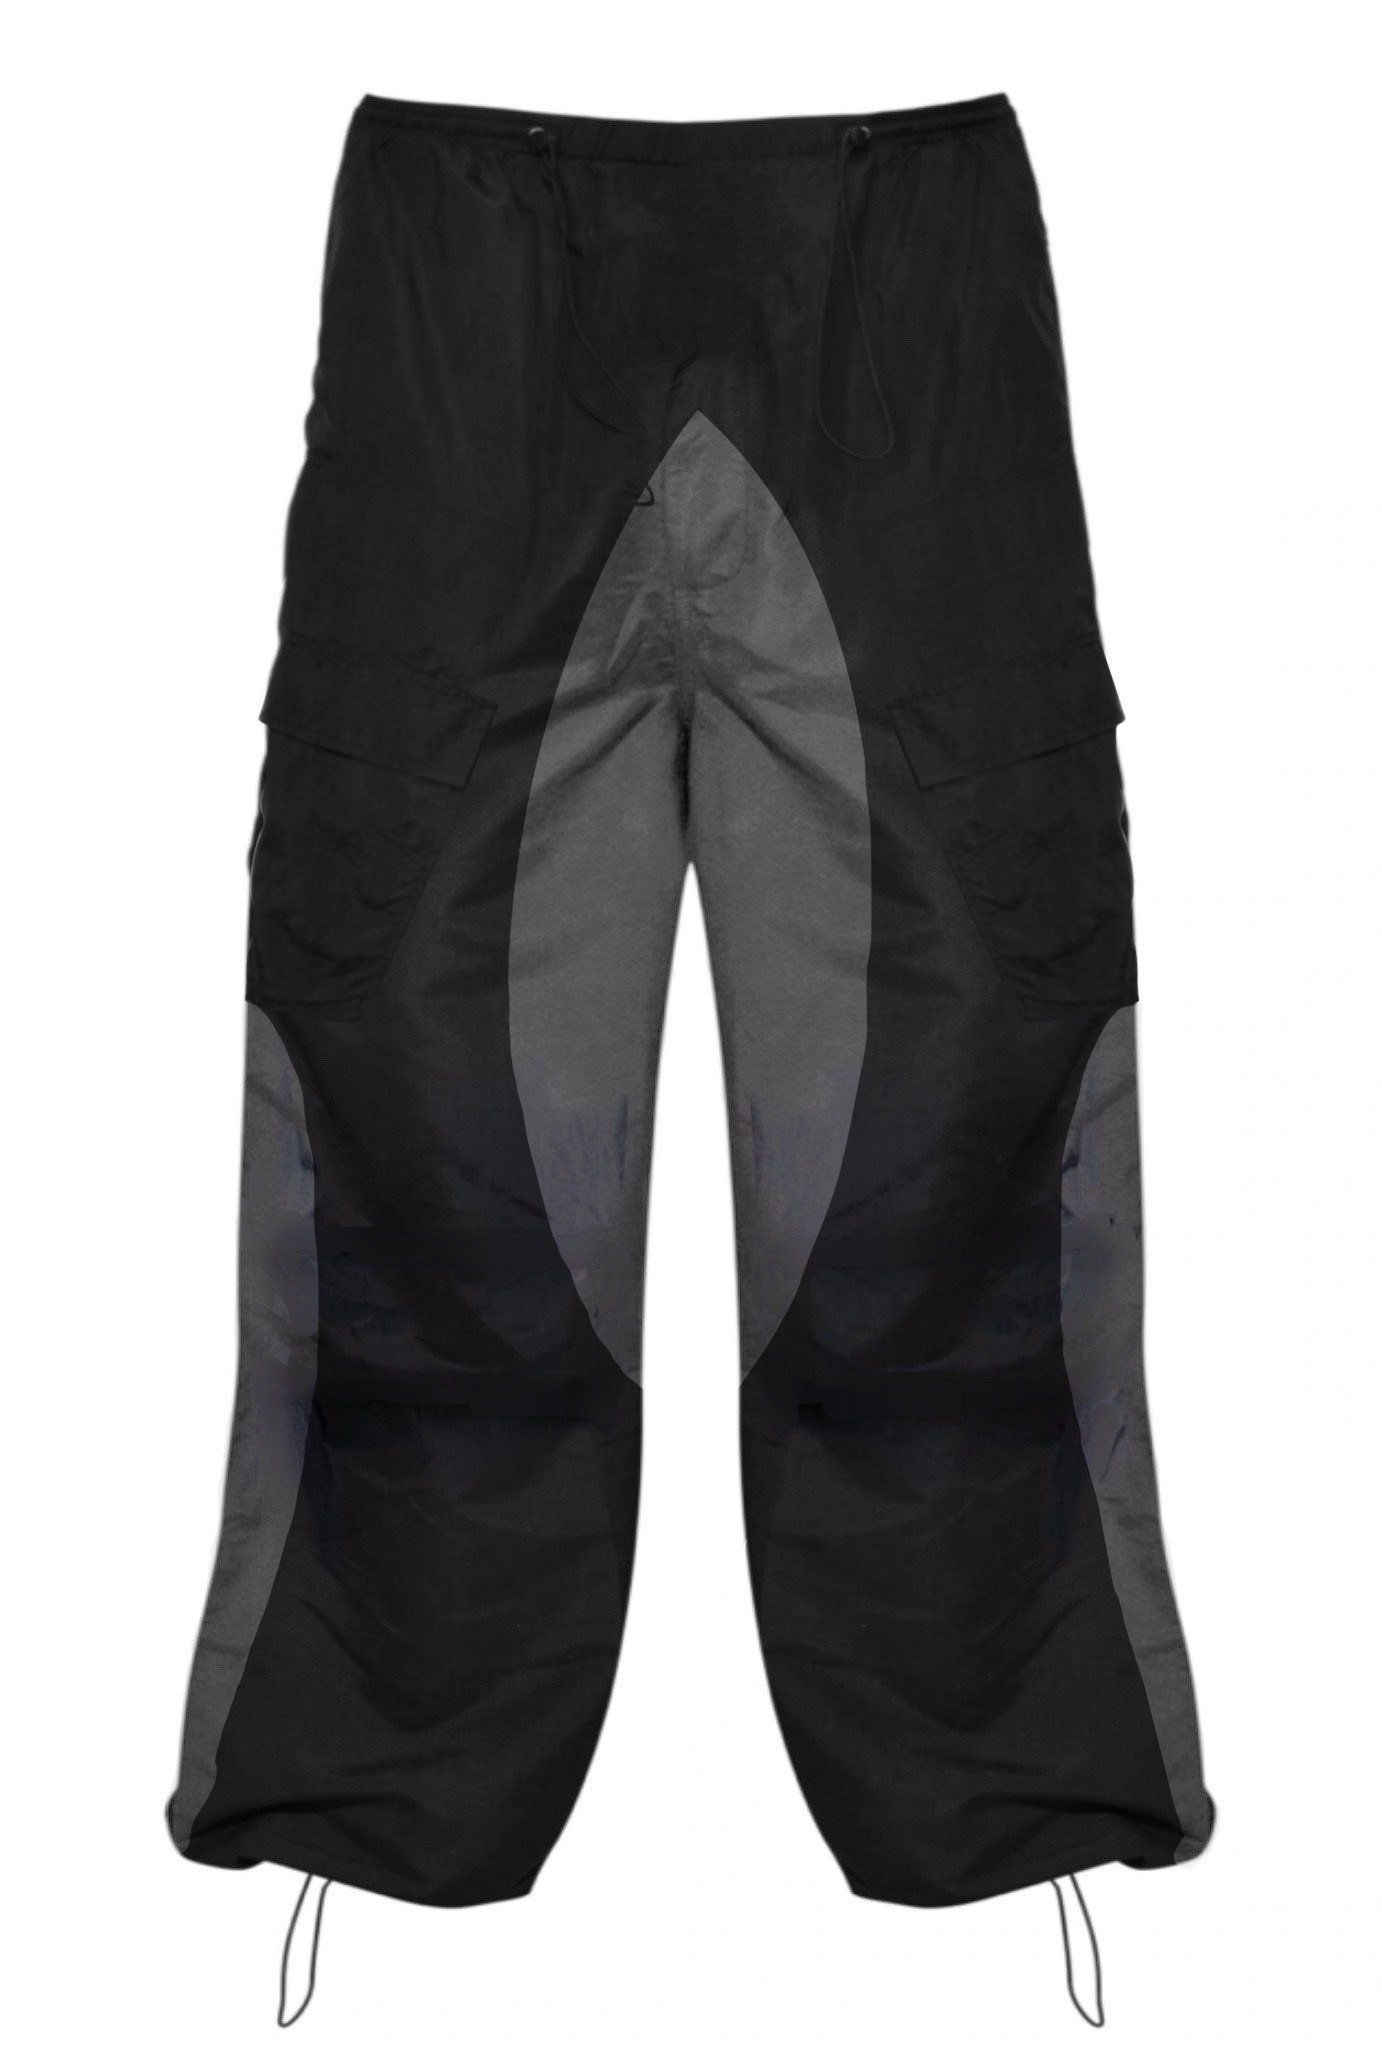  Apride Parachute Patching Pants Black - Grey 